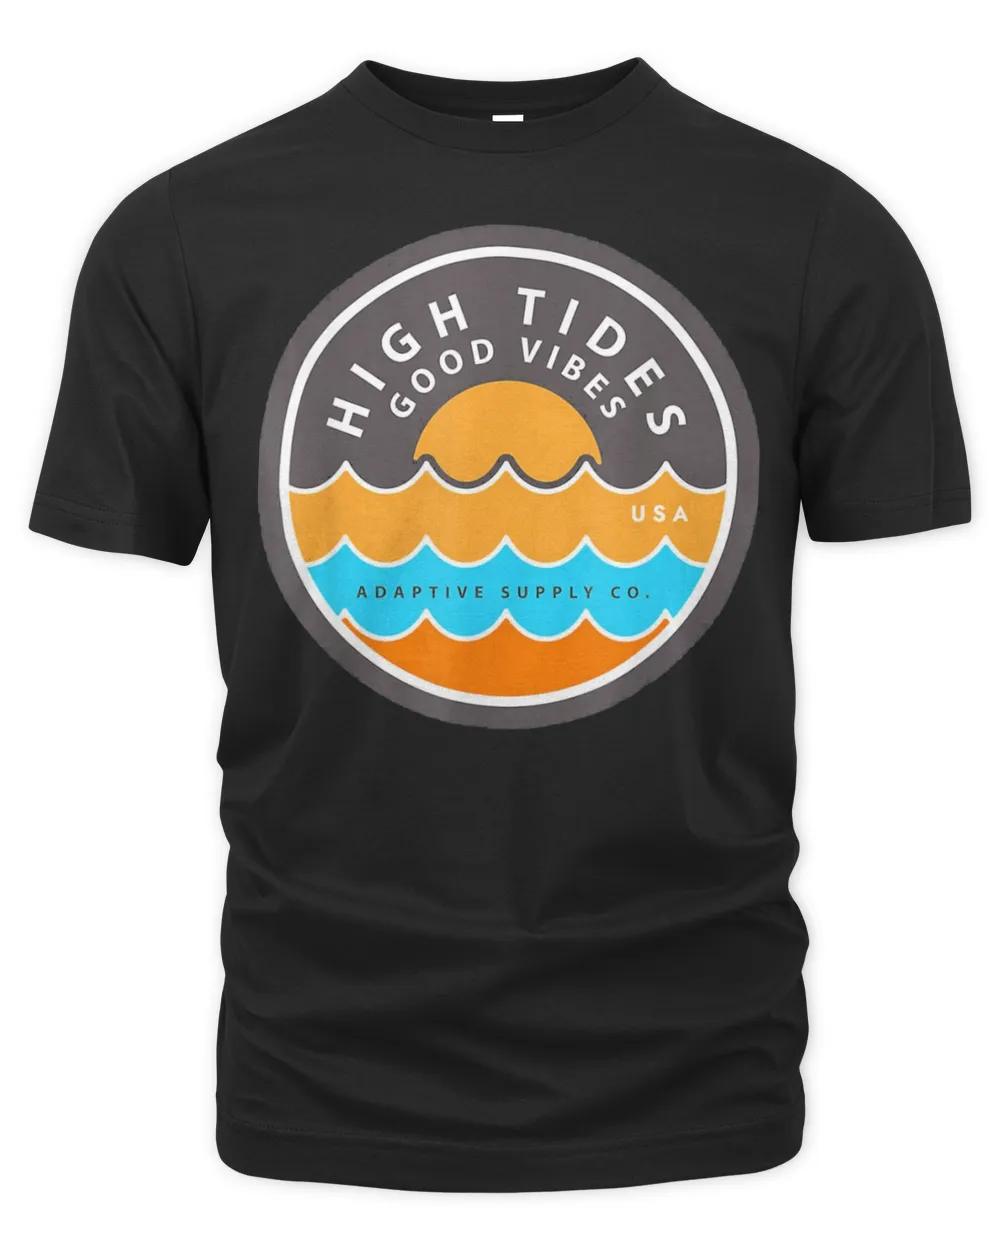 High Tides Good Vibes T-Shirt